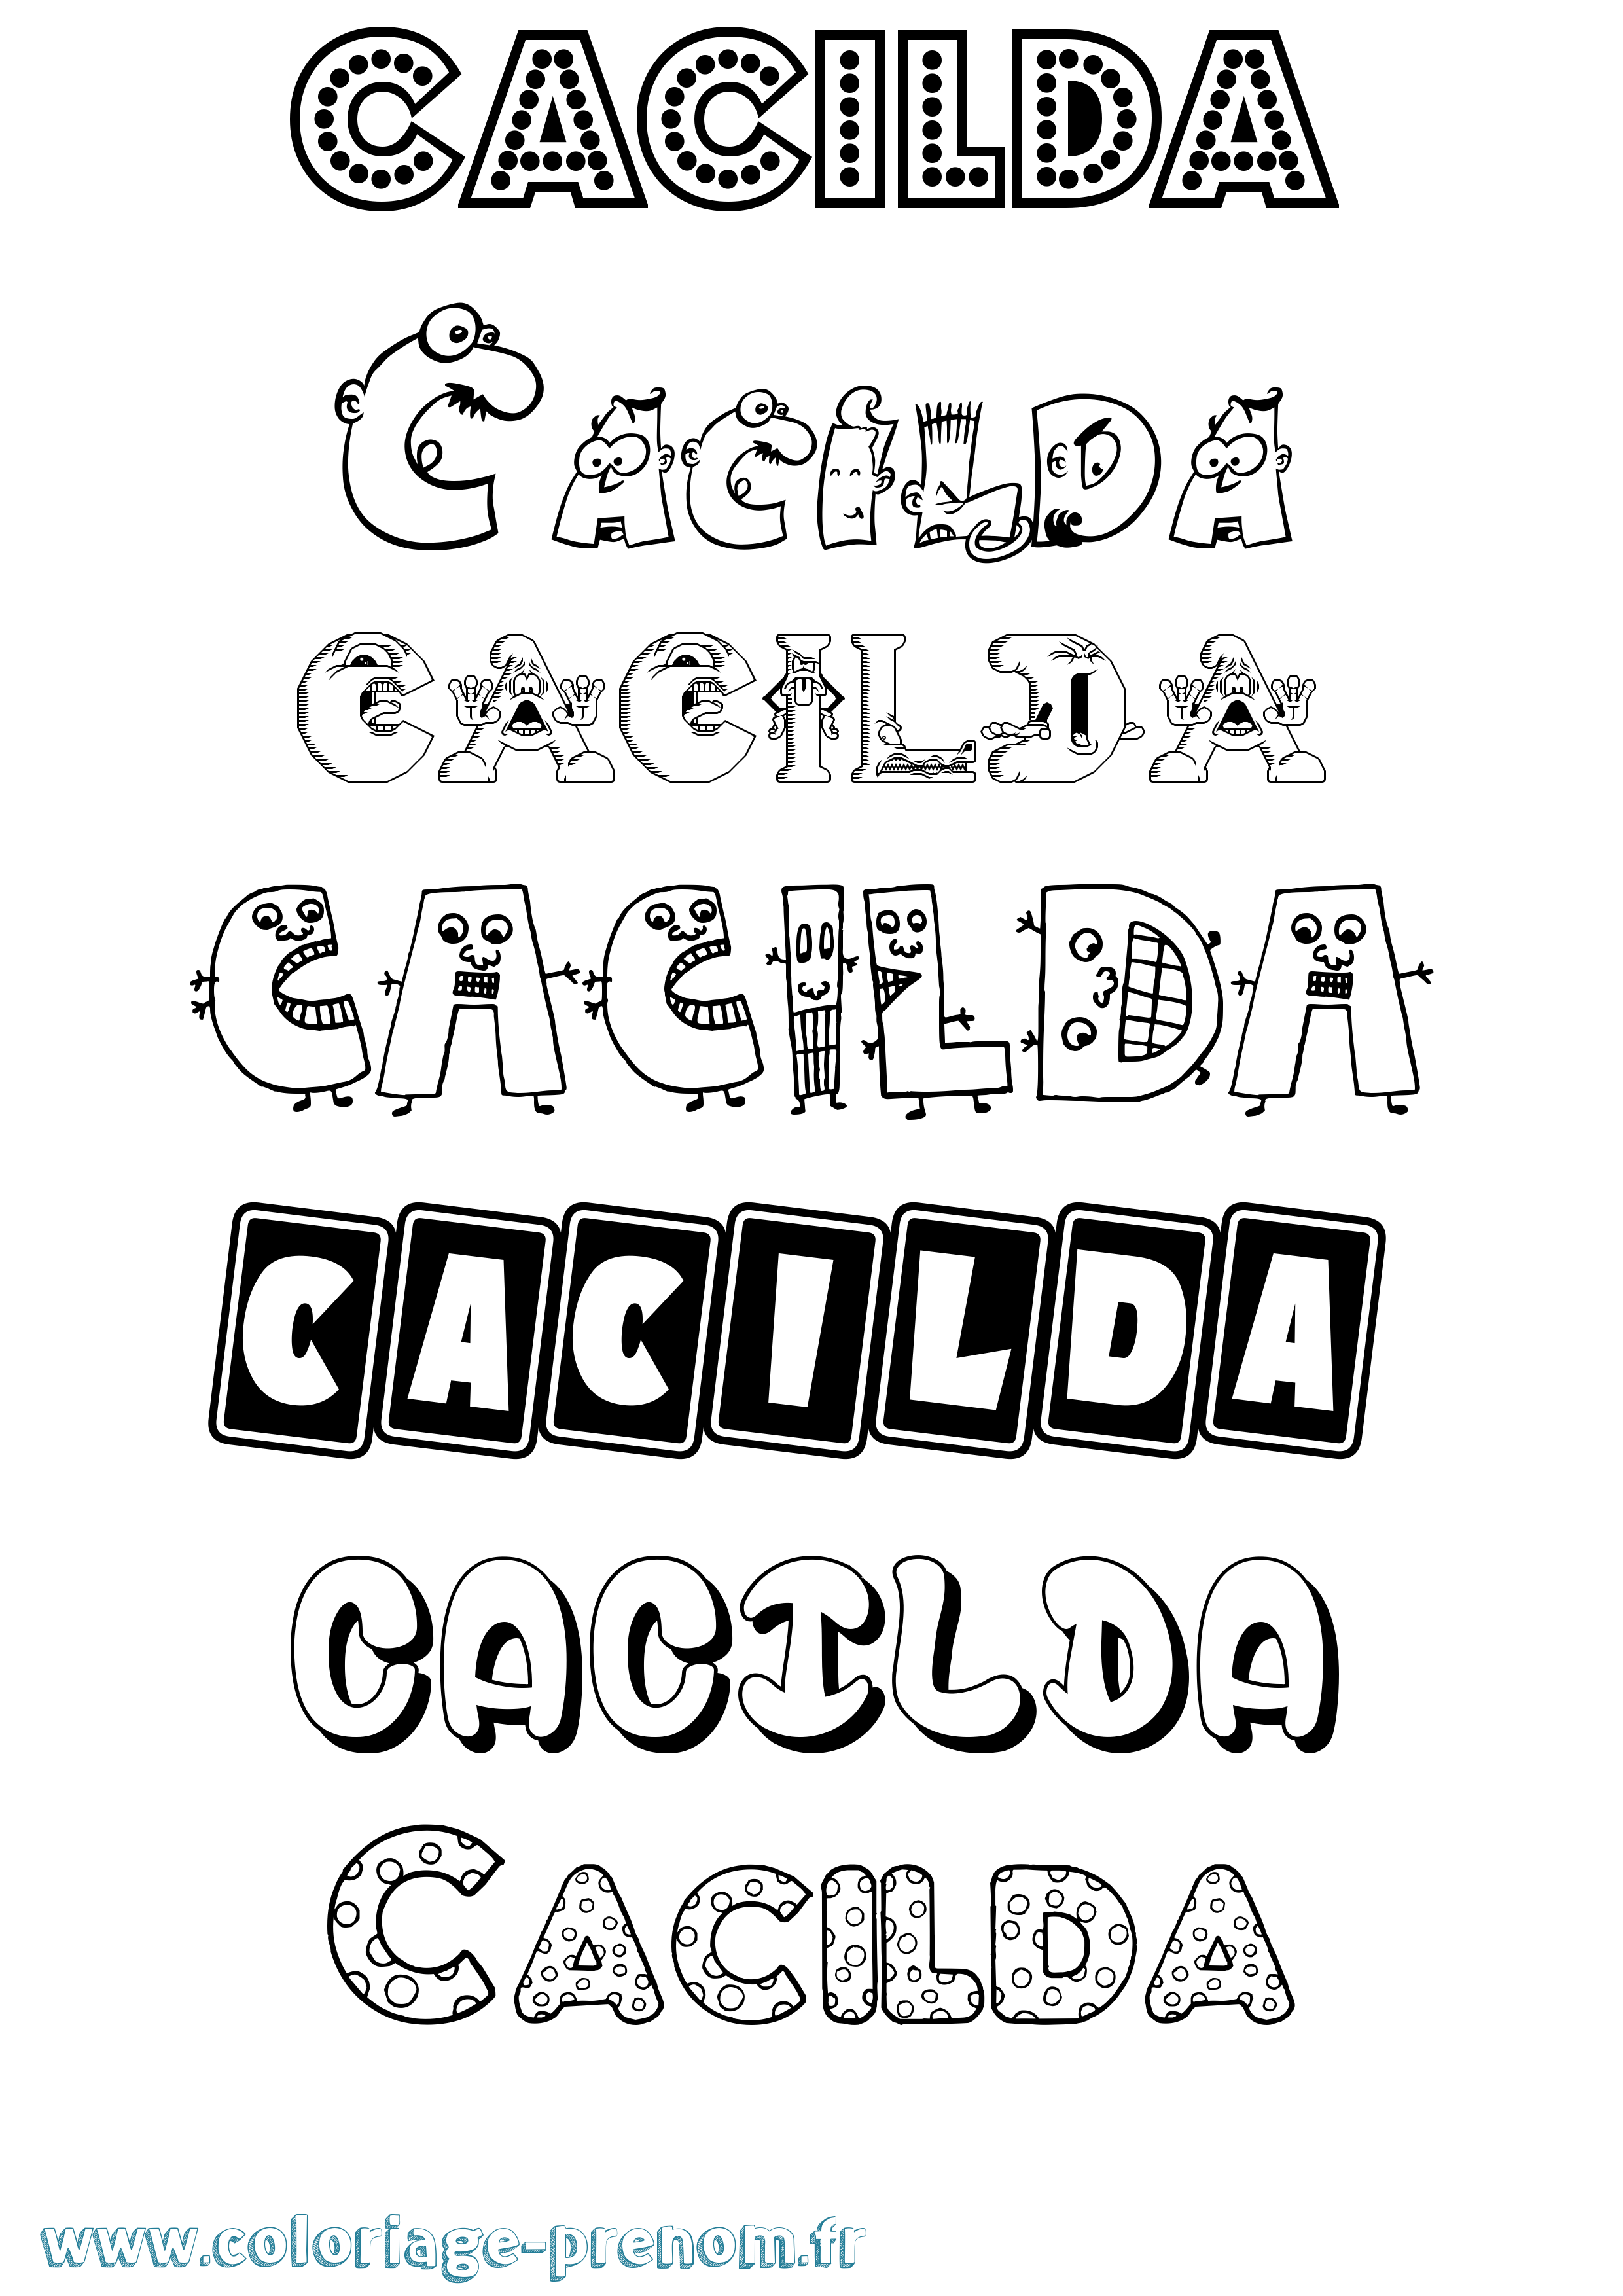 Coloriage prénom Cacilda Fun